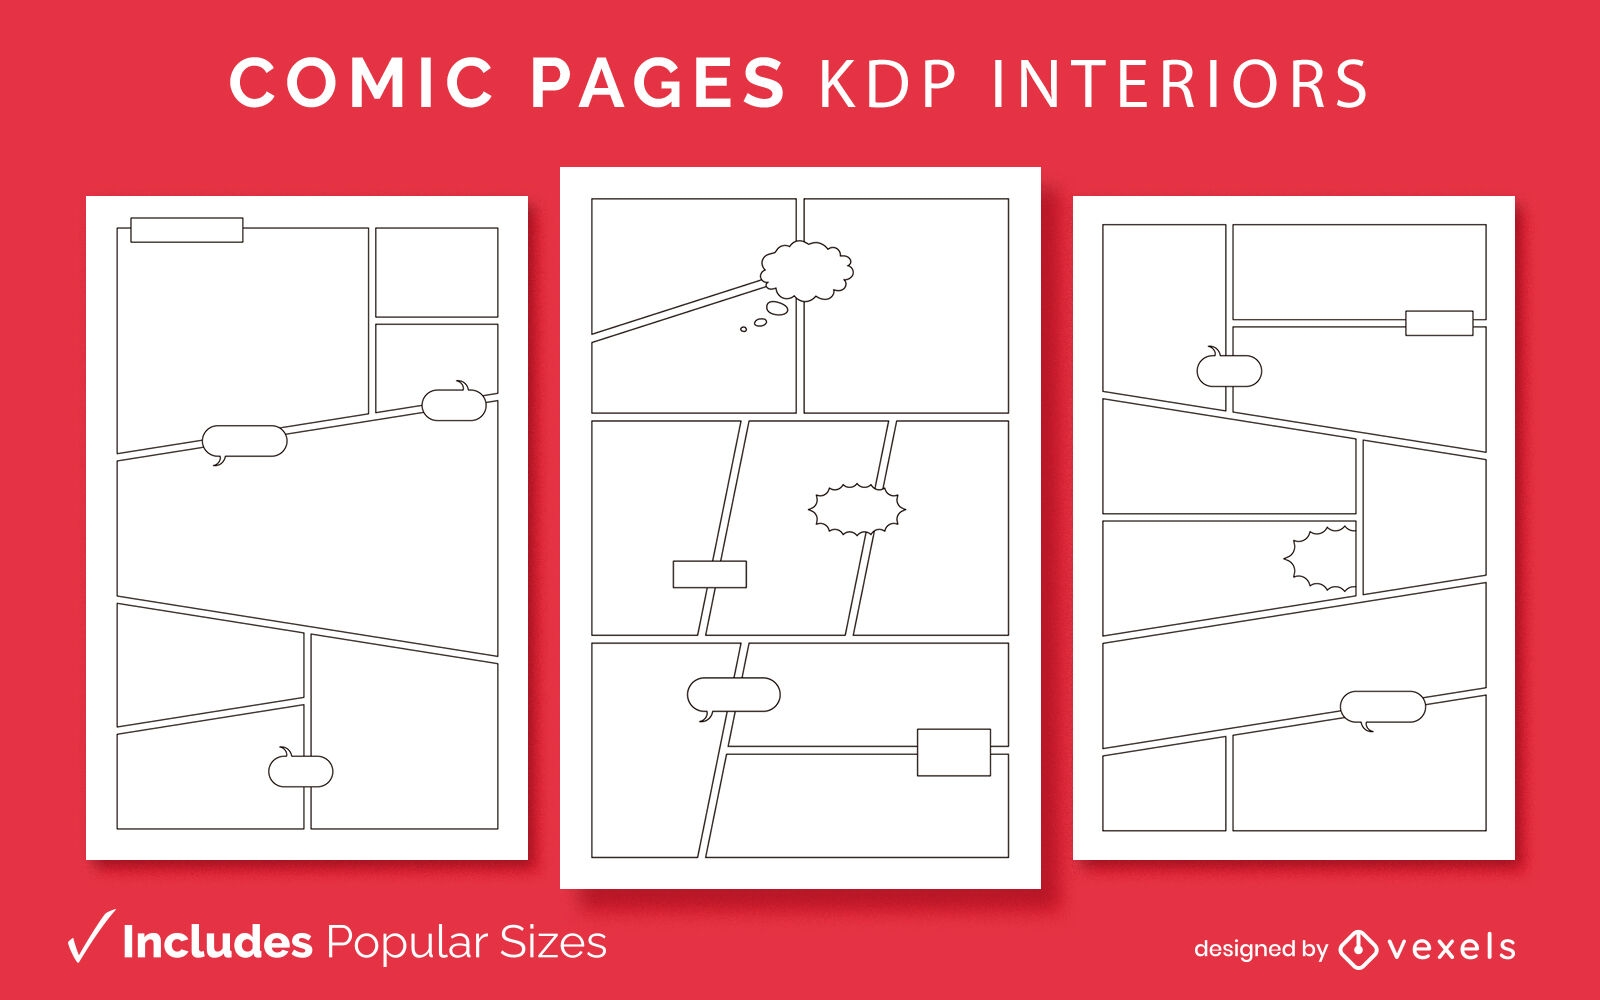 Comic pages KDP interior design